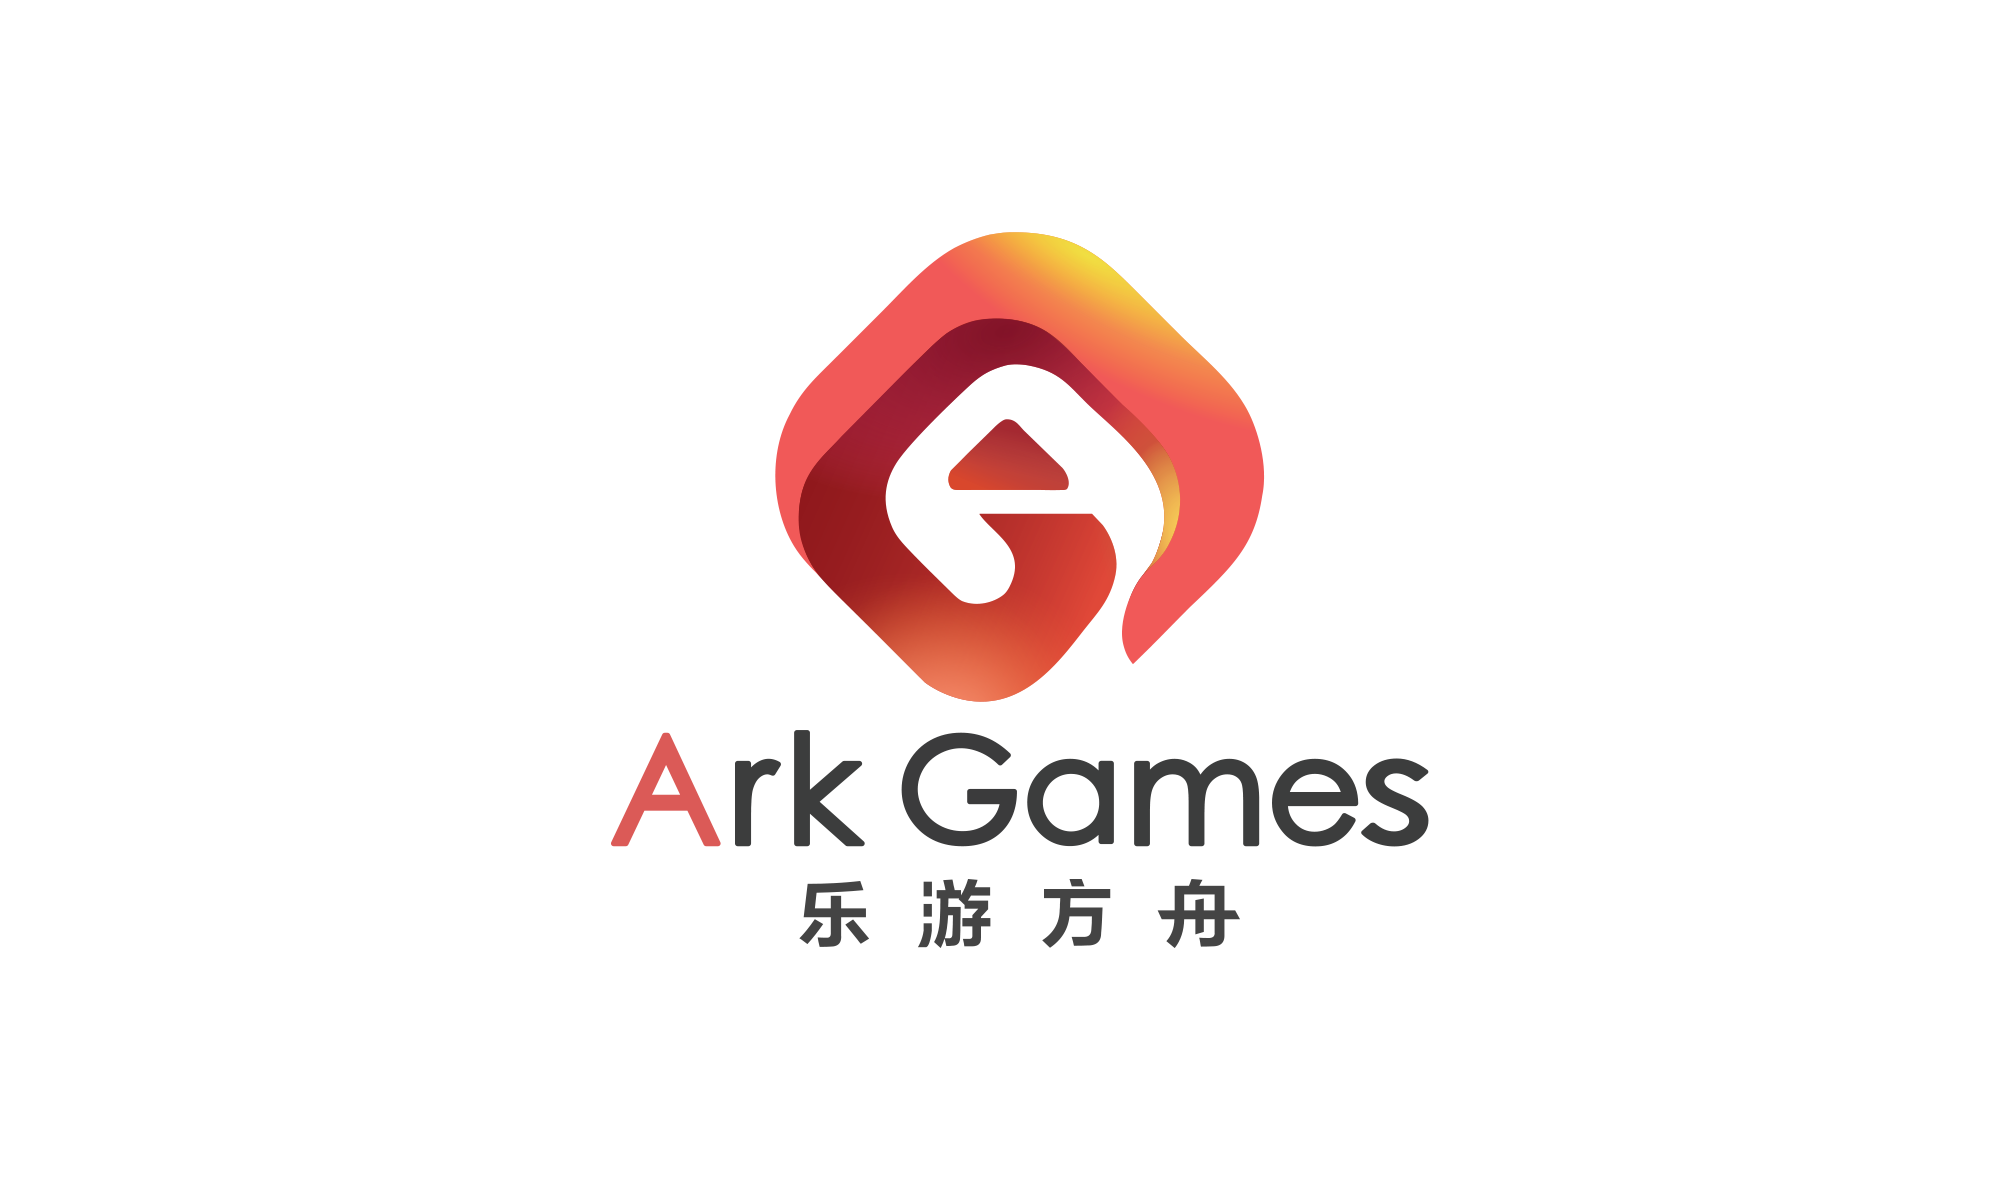 Ark Games